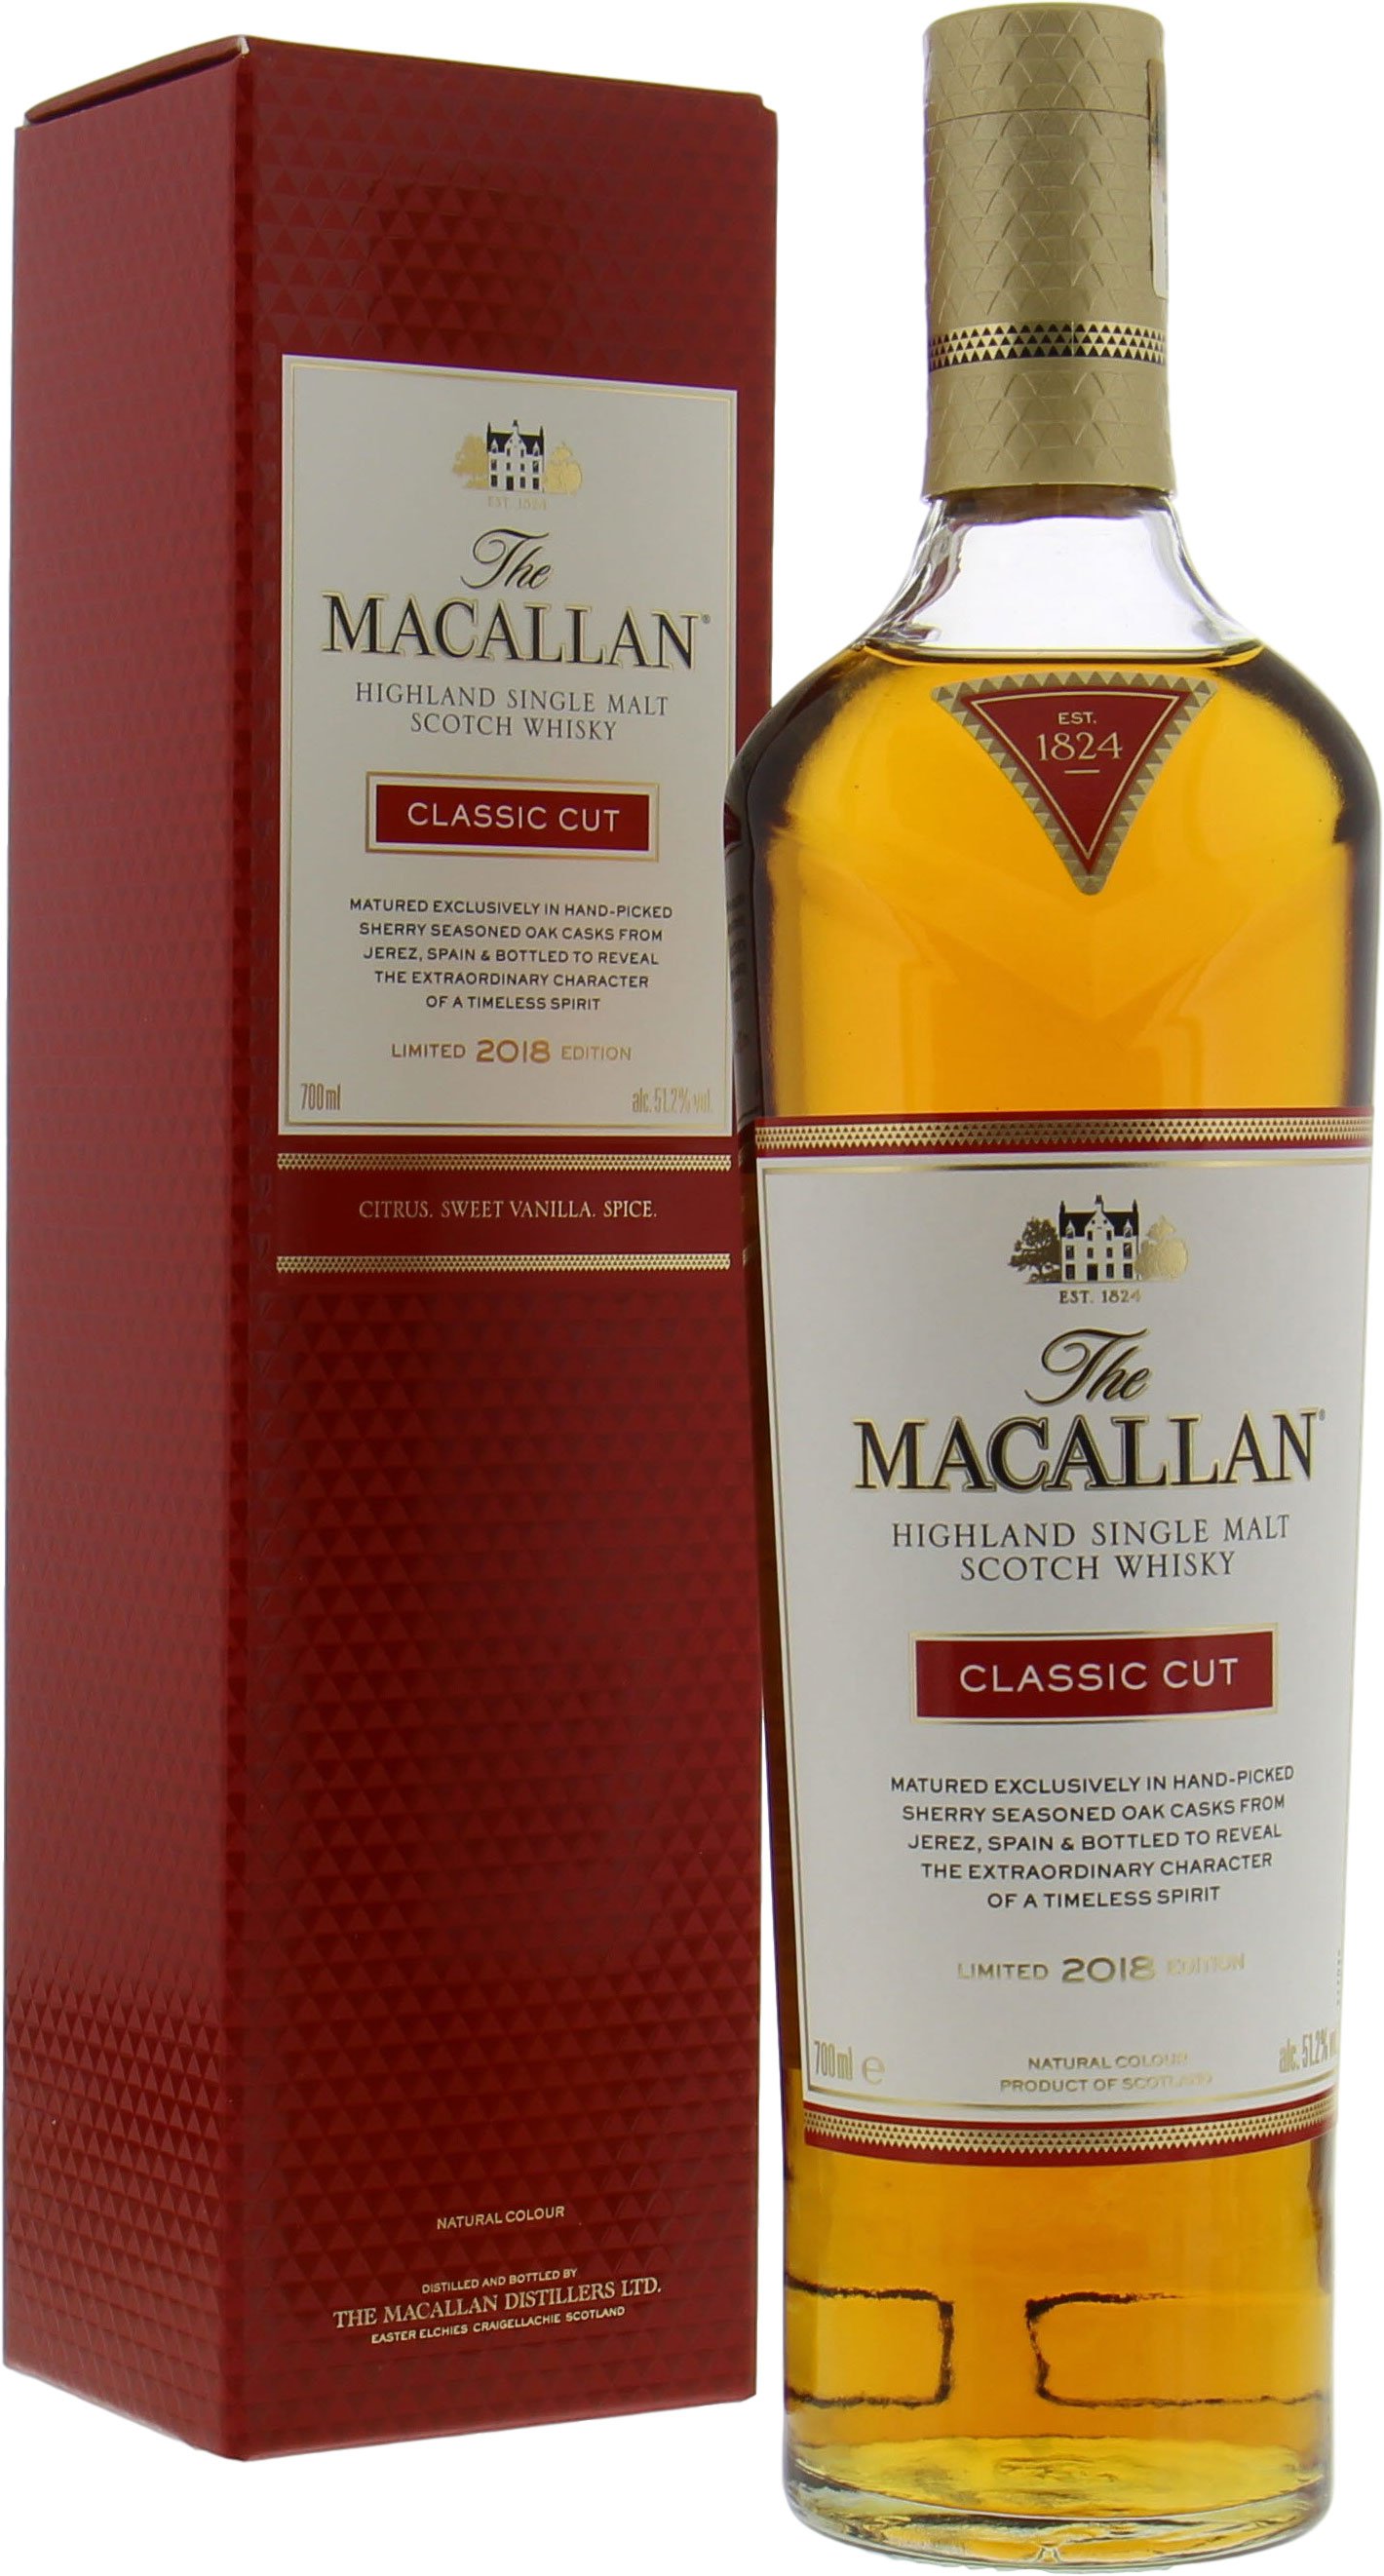 Macallan - Classic Cut Limited 2018 Edition 51.2% NV In Original Box